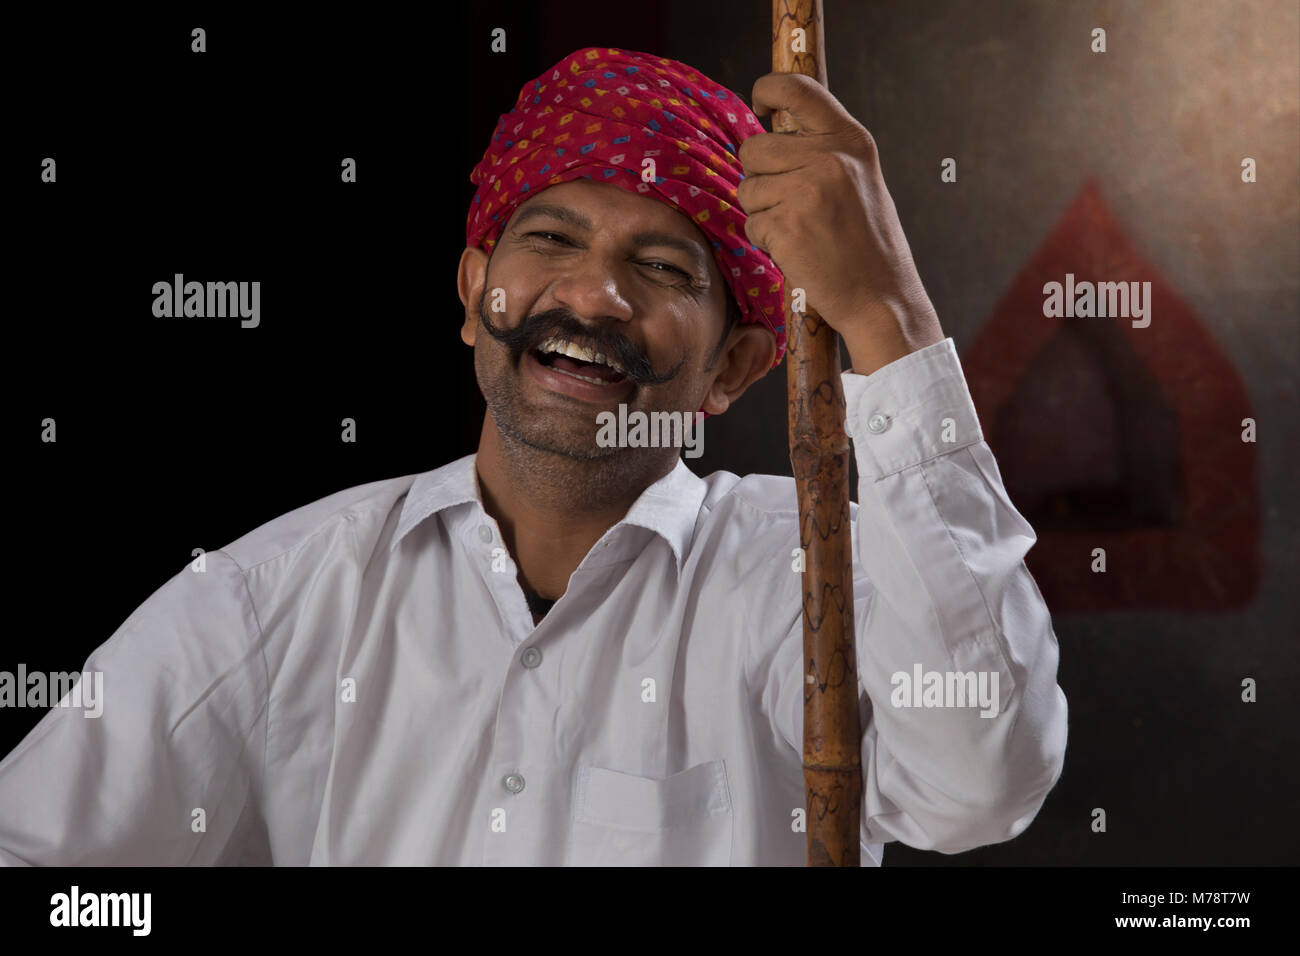 Retrato de agricultor llevaba turbante celebración stick Foto de stock